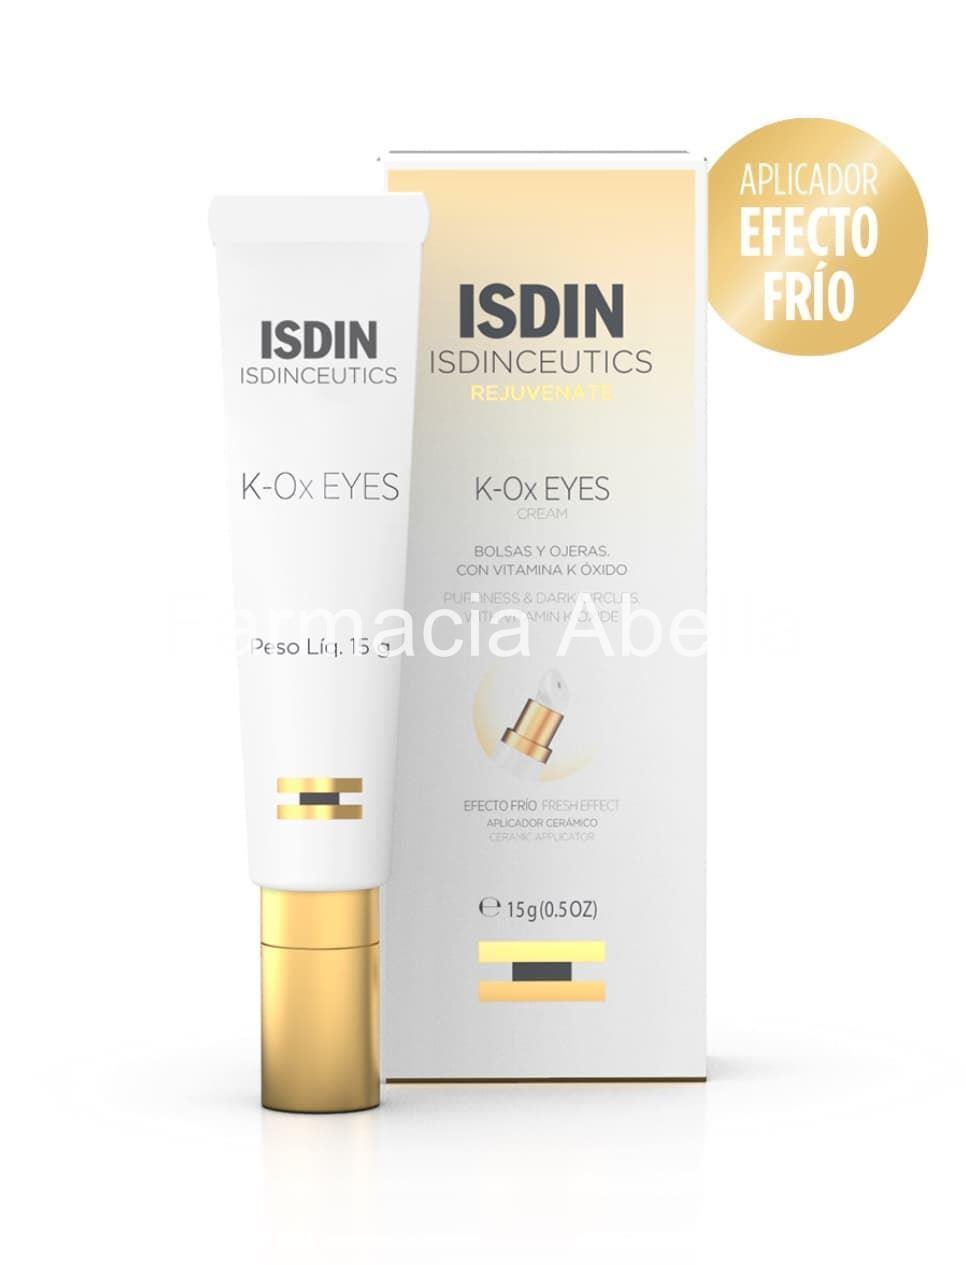 Isdinceutics K-Ox Eyes efecto frío crema 15g con regalo de minitalla isdinceutics age repair crema - Imagen 1